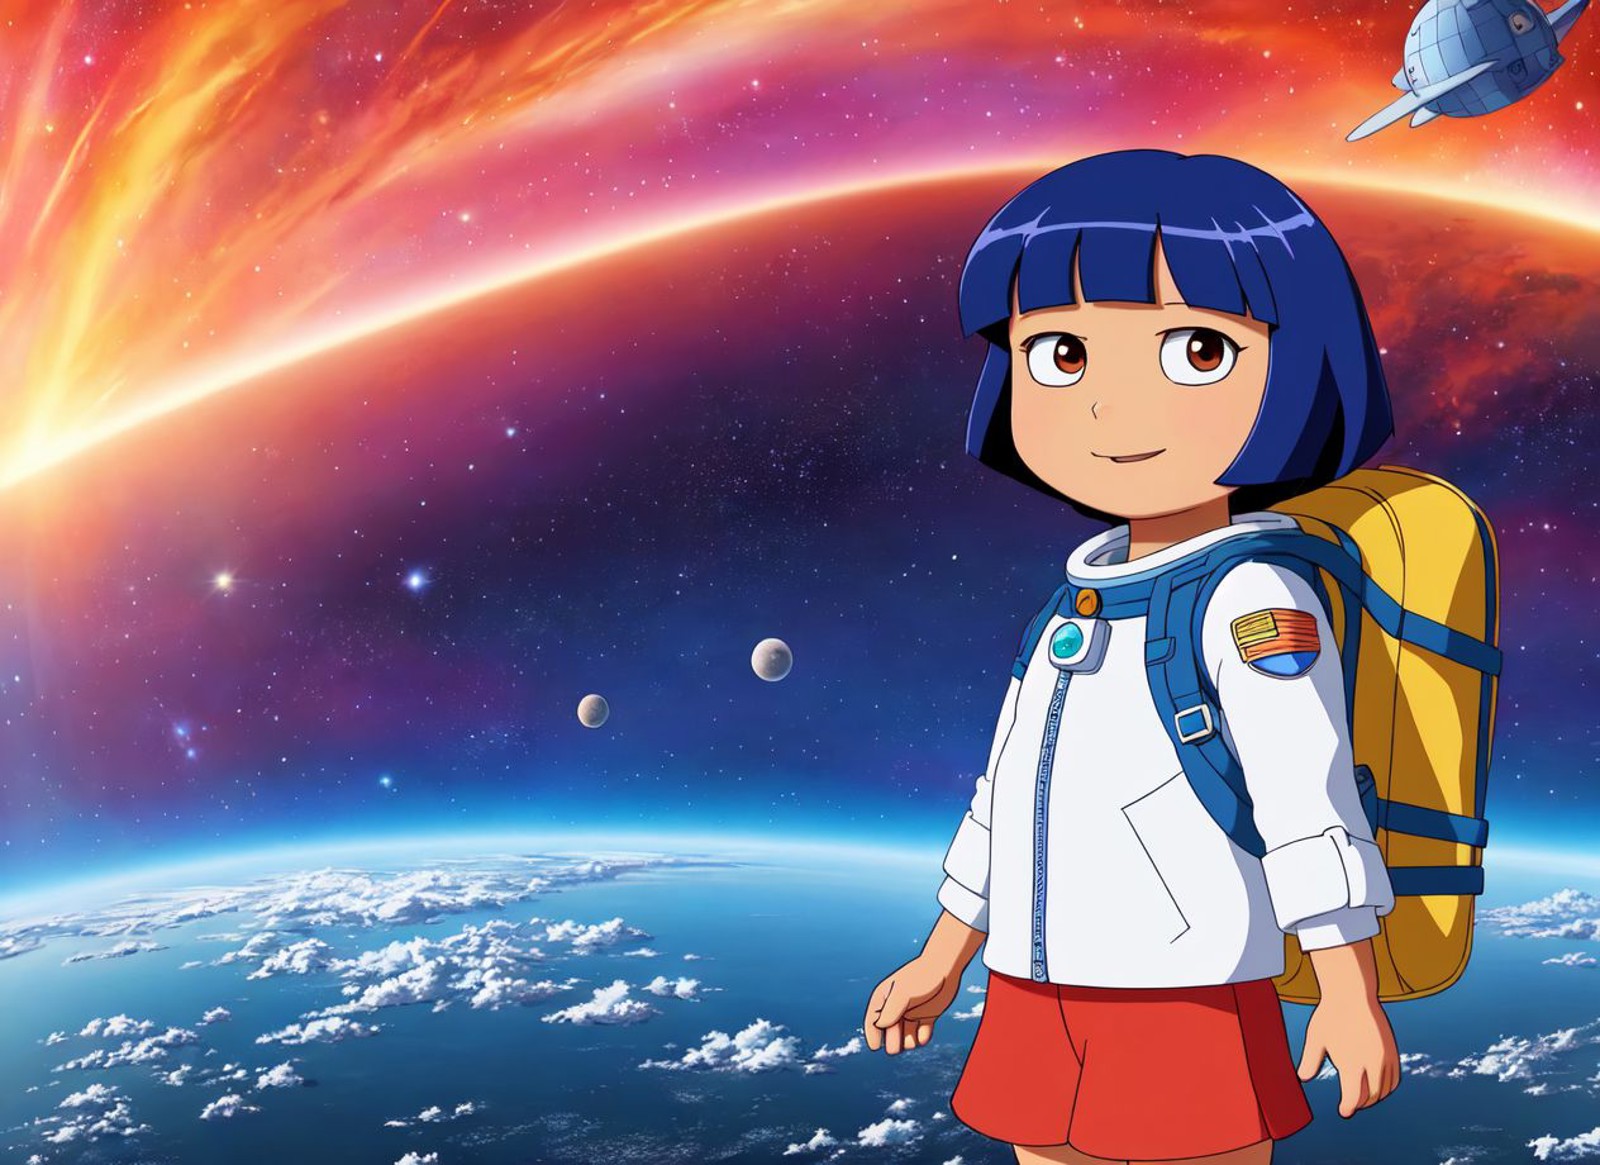 00069-20230531094739-7779-Dora the anime space explorer, Very detailed, clean, high quality, sharp image, Eric Wallis.jpg